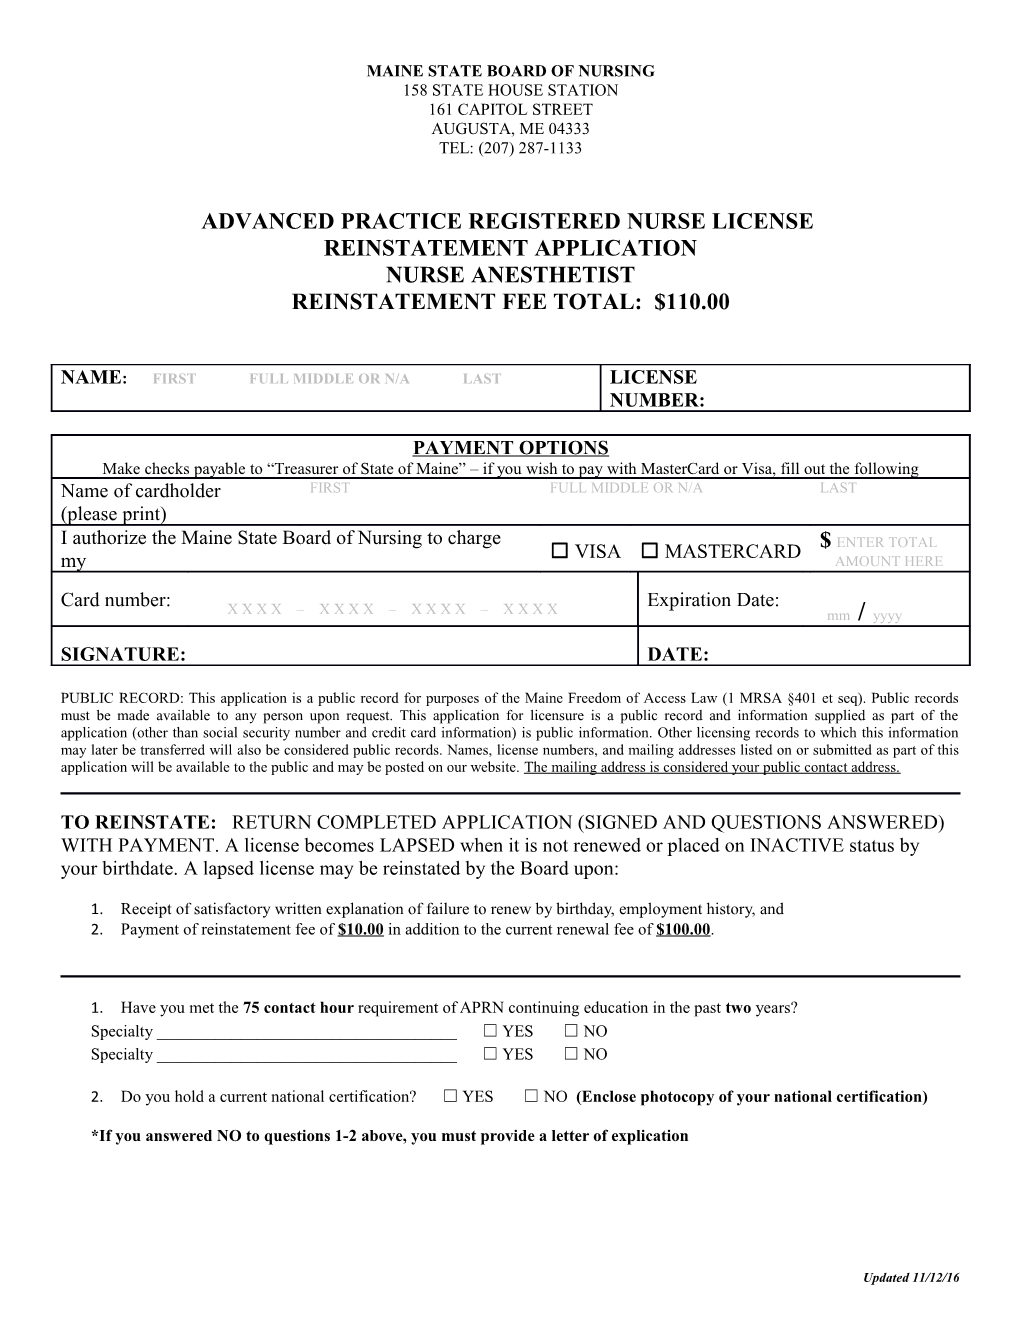 Advanced Practice Registered Nurse License